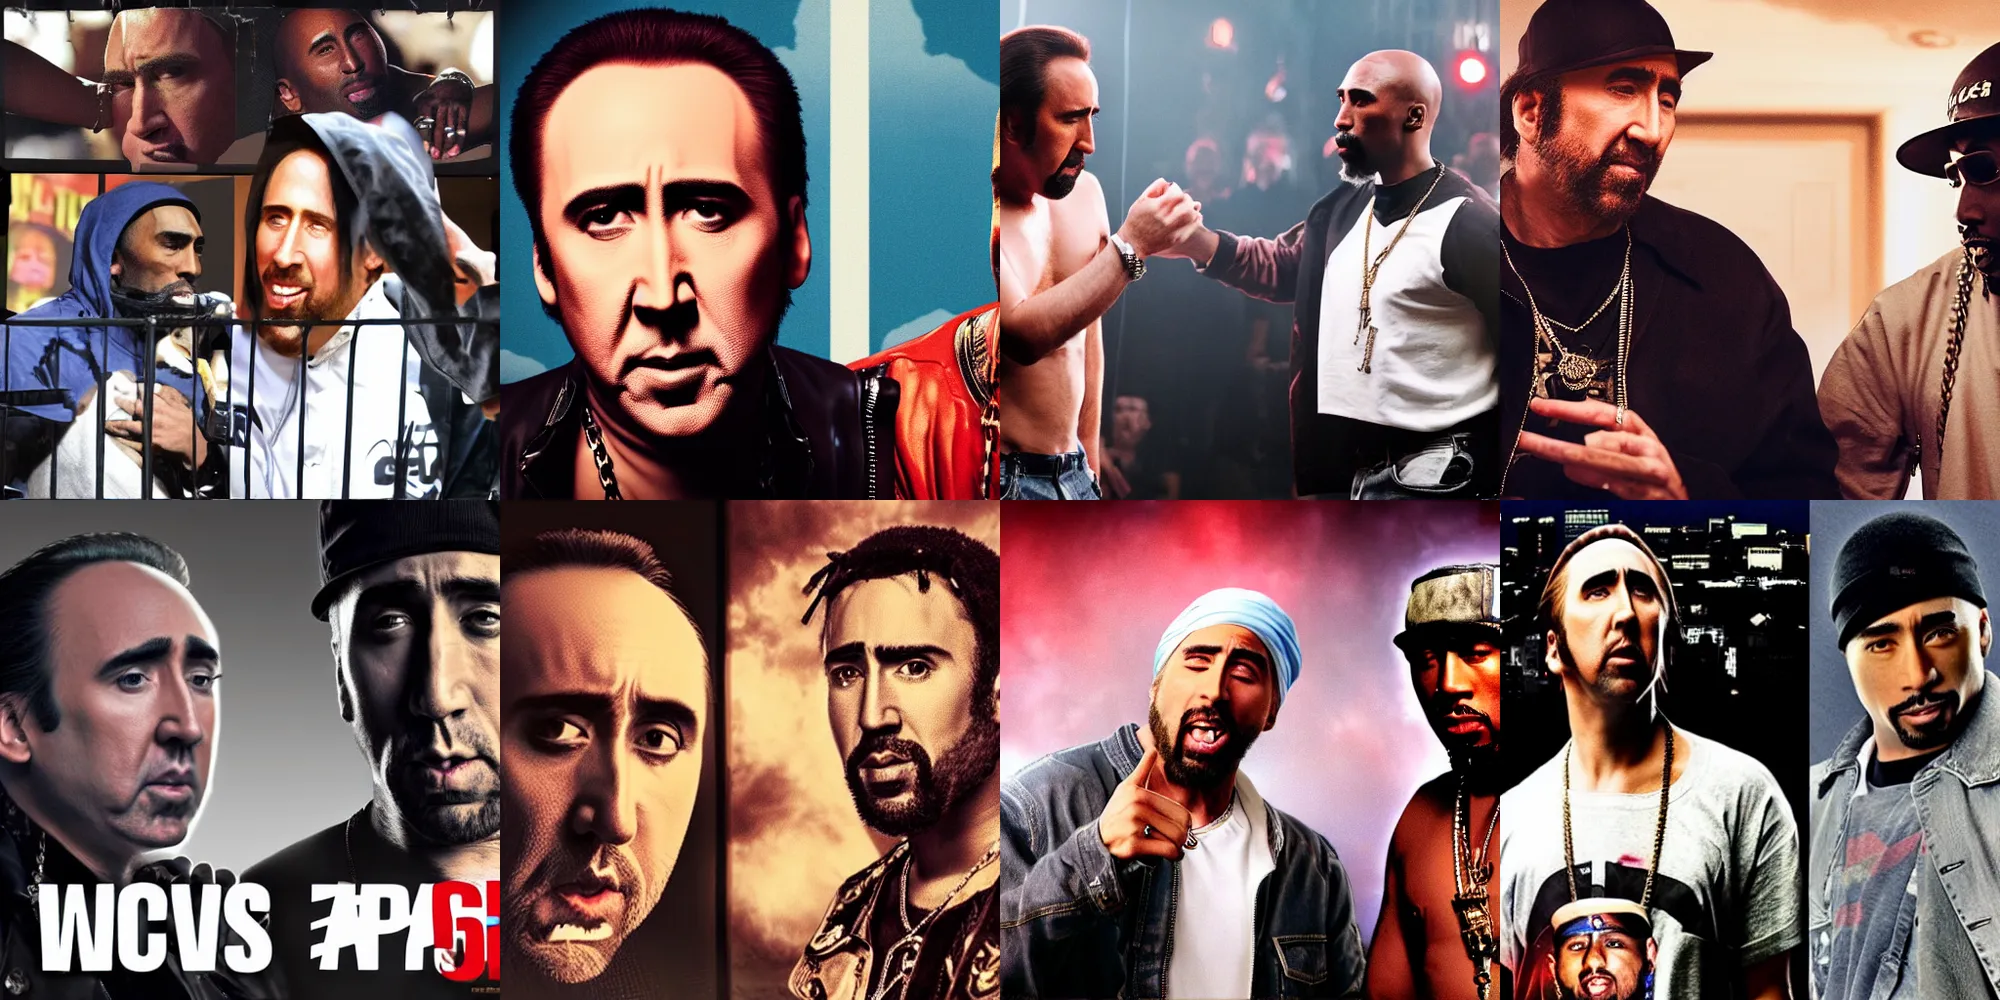 Prompt: Nicolas Cage vs Tupac rap battle hyper realistic 8k archival photo great lighting